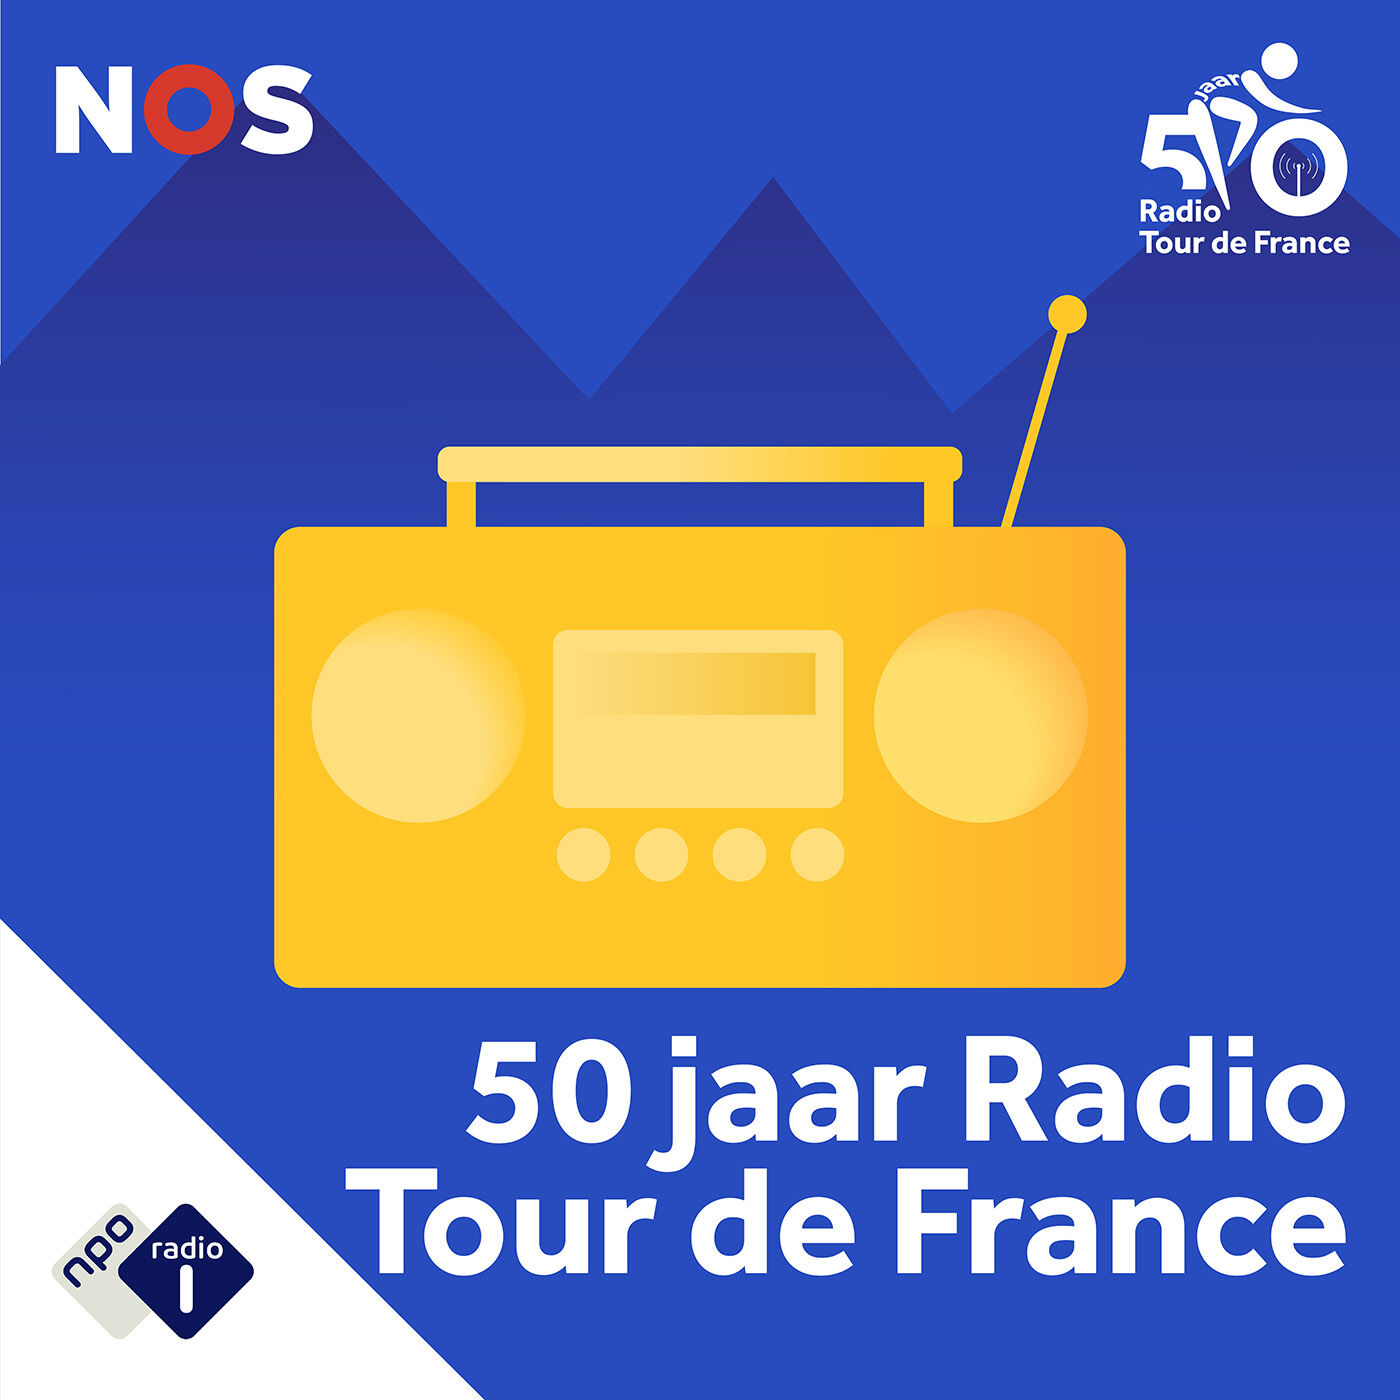 50 jaar Radio Tour de France logo